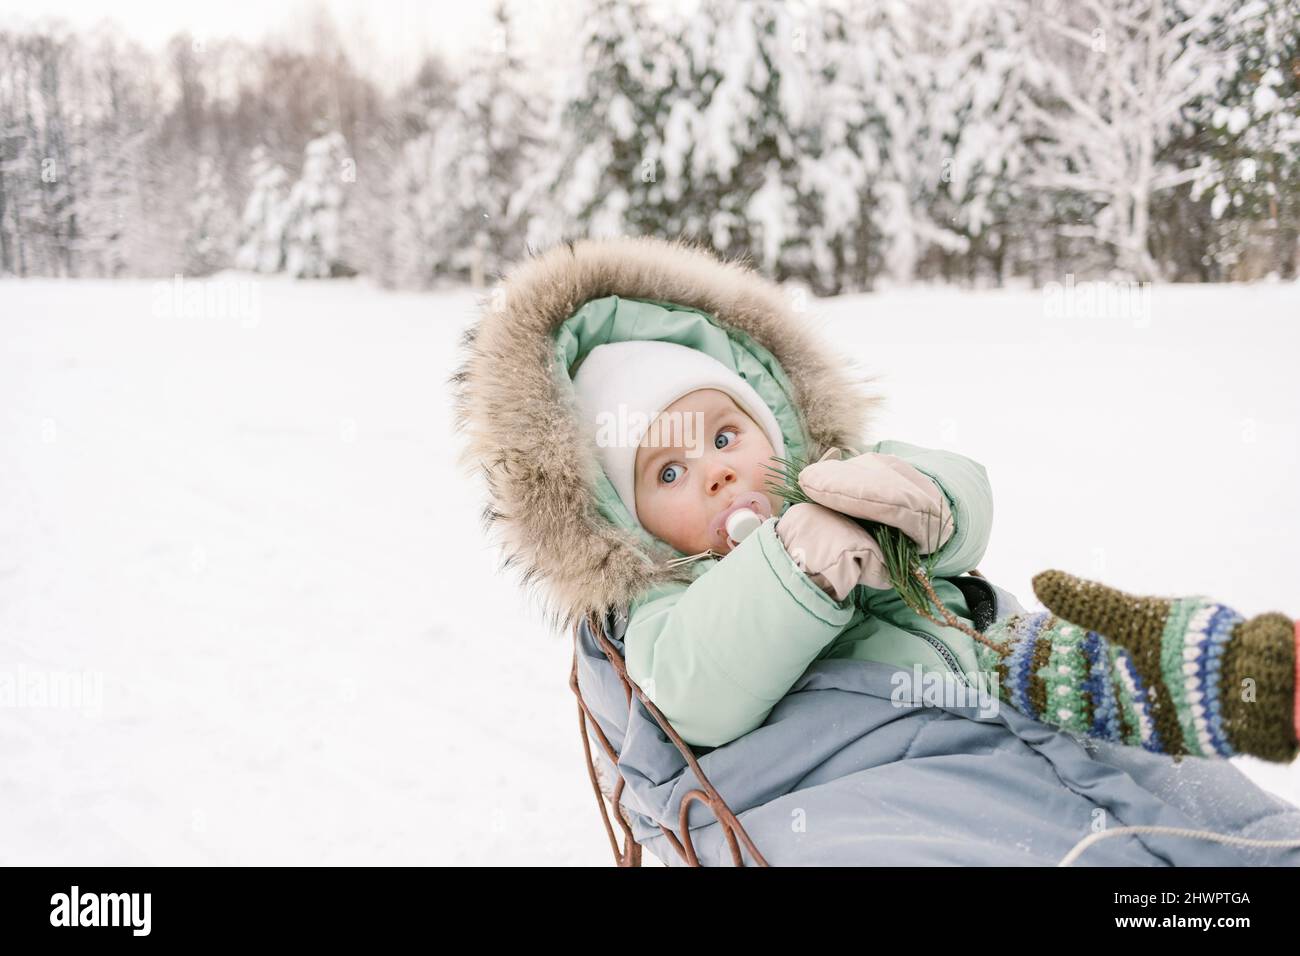 Cute little girl sitting in snow in winter stock photo